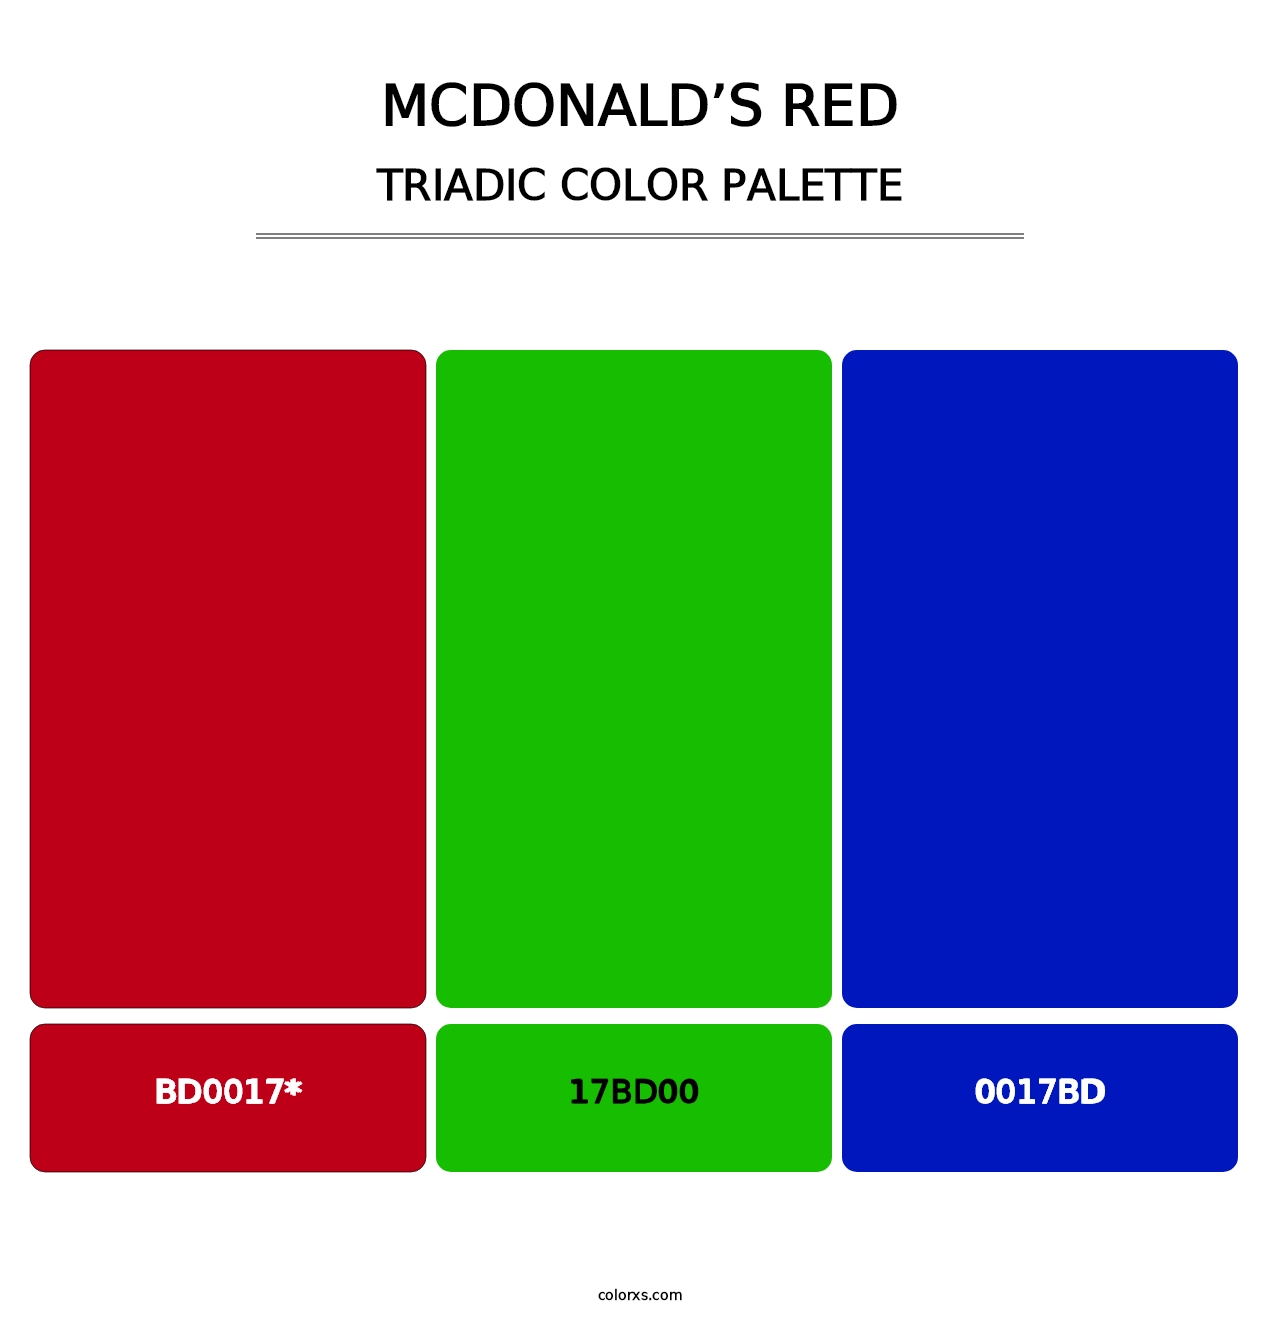 McDonald’s Red - Triadic Color Palette